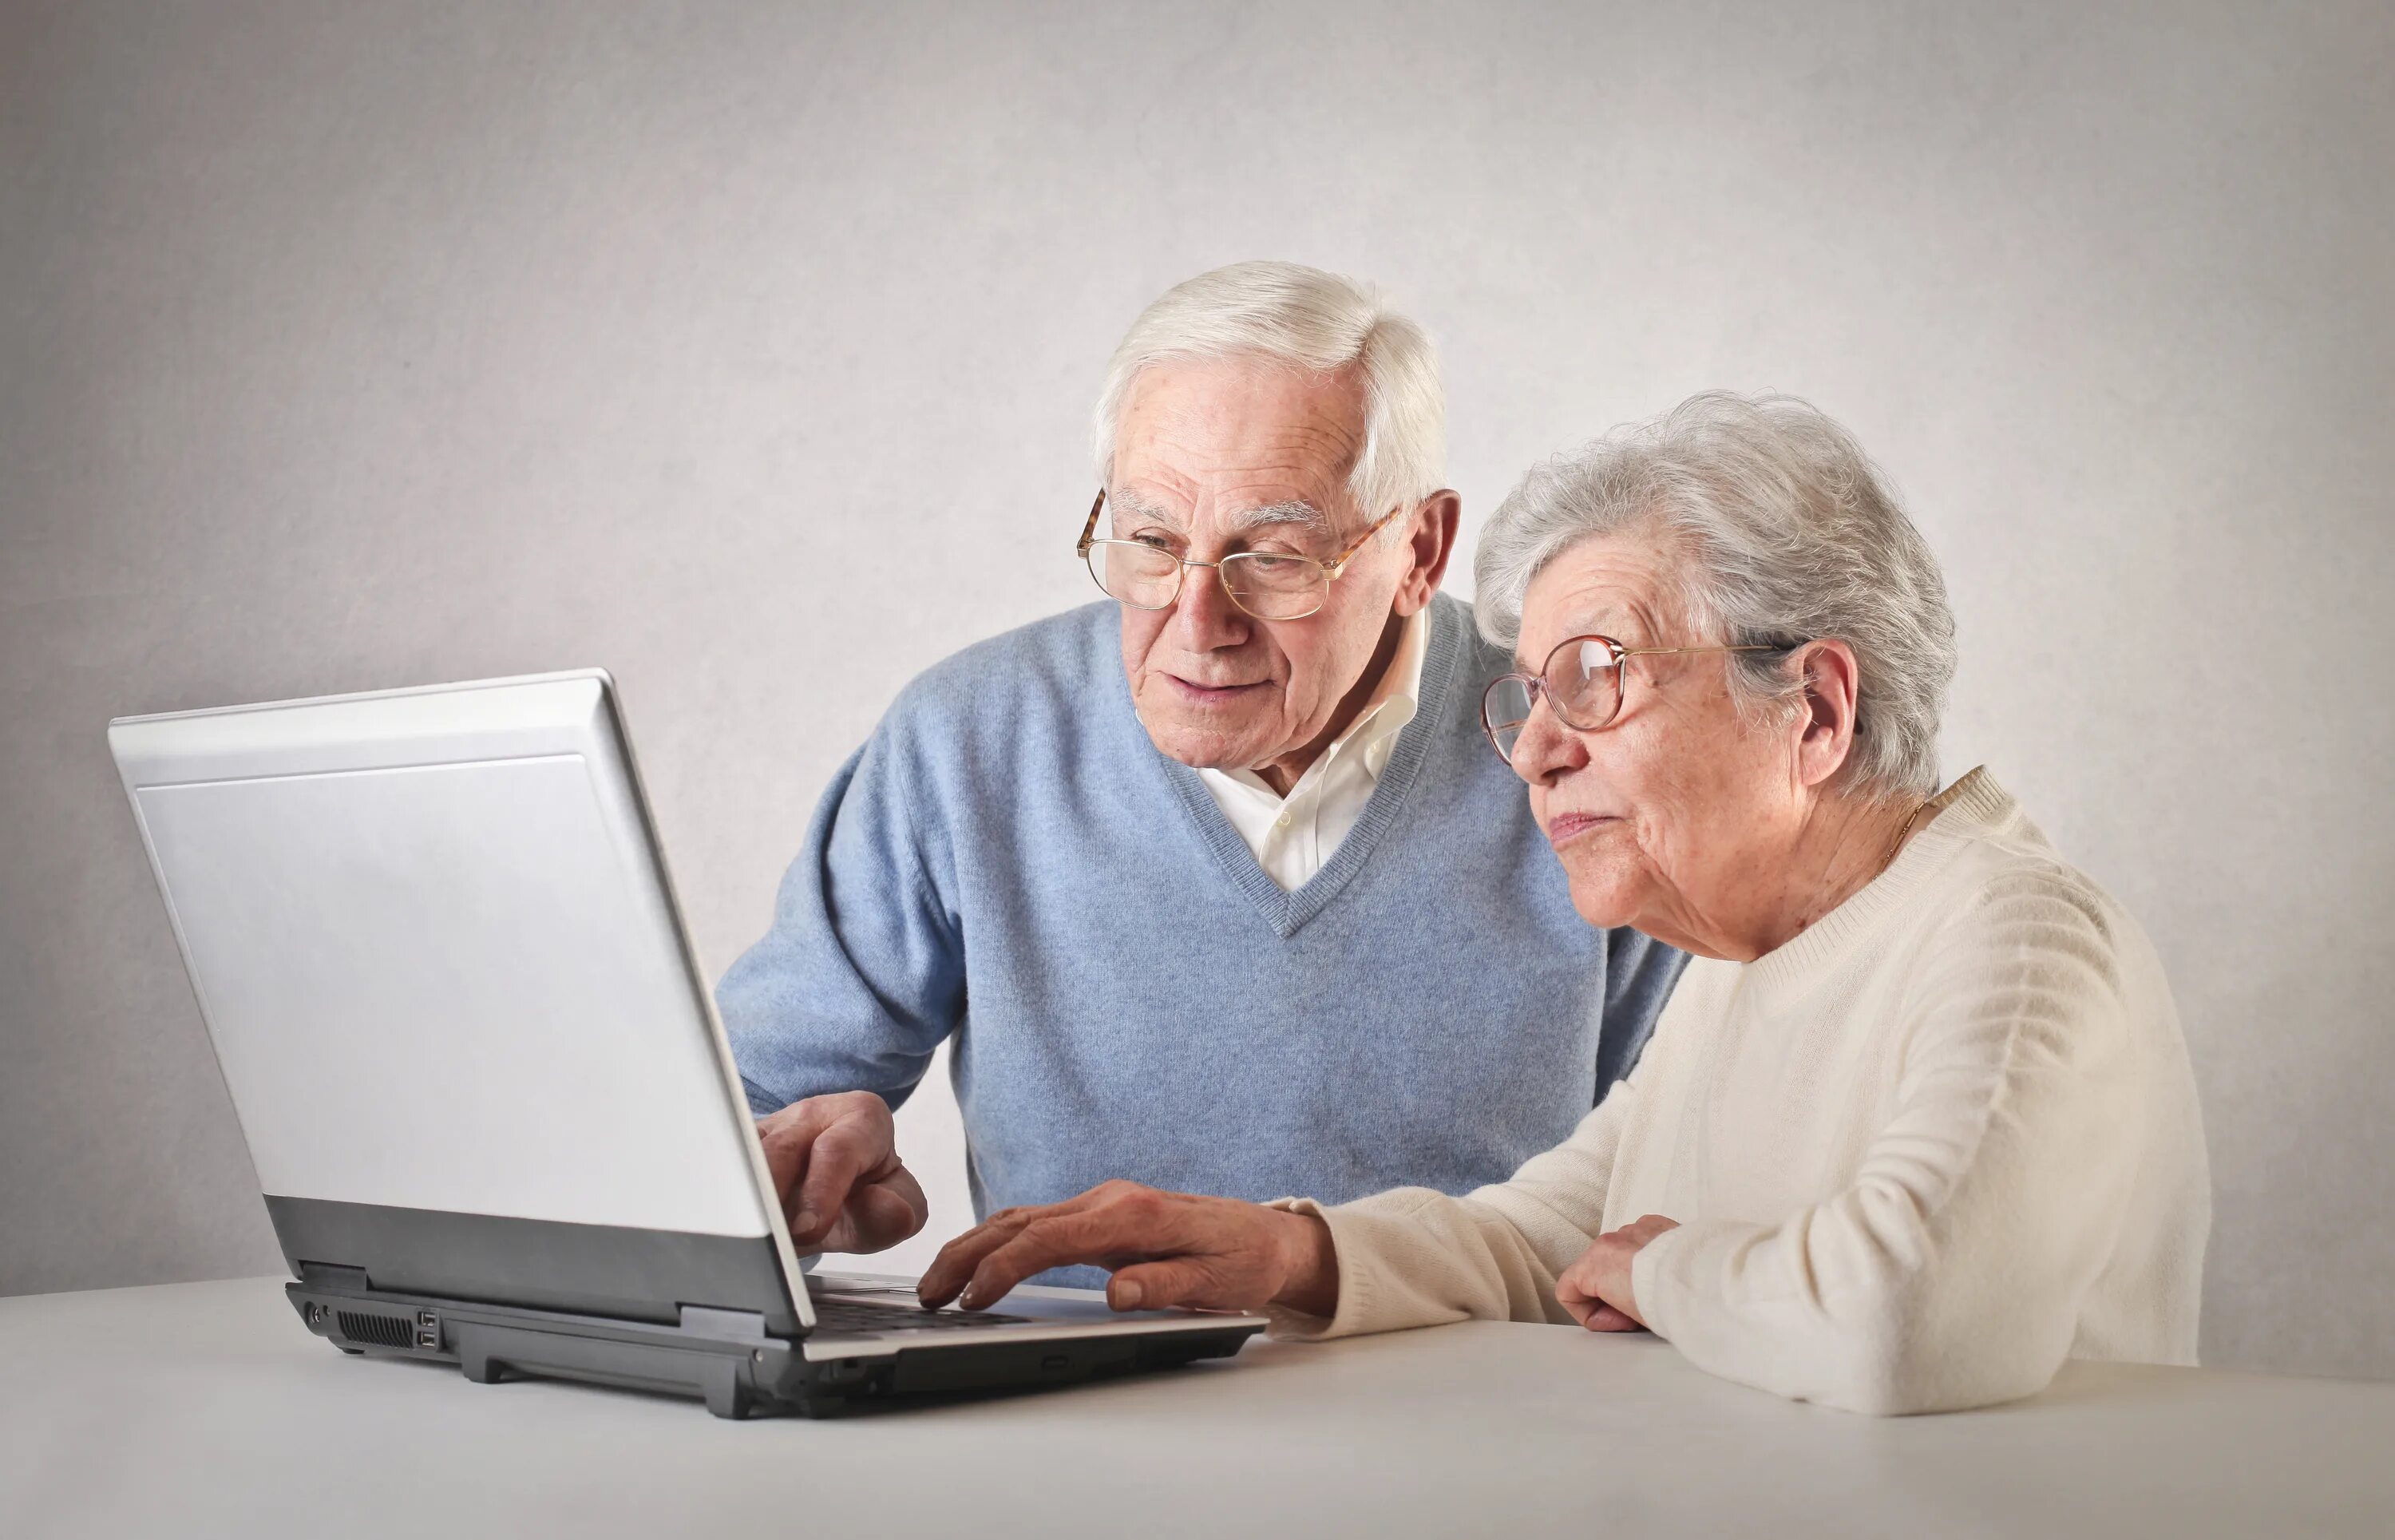 Пенсионеры и компьютер. Старики и компьютер. Пожилые люди и компьютер. Пожилой человек за компьютером.